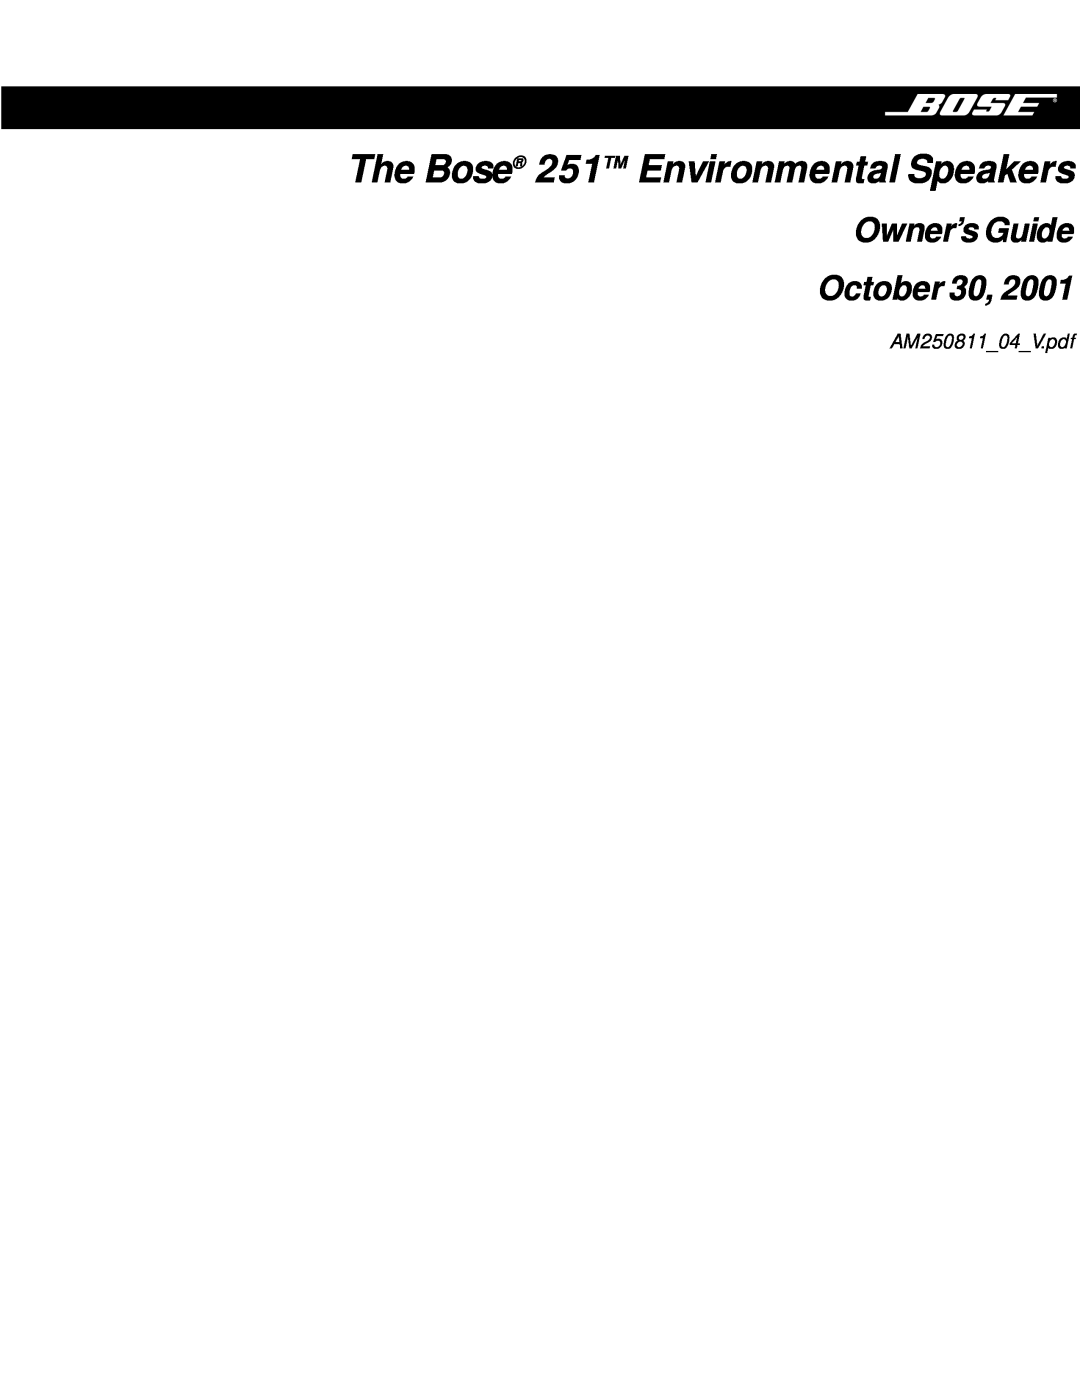 Bose manual The Bose 251TM Environmental Speakers, Owner’s Guide October 